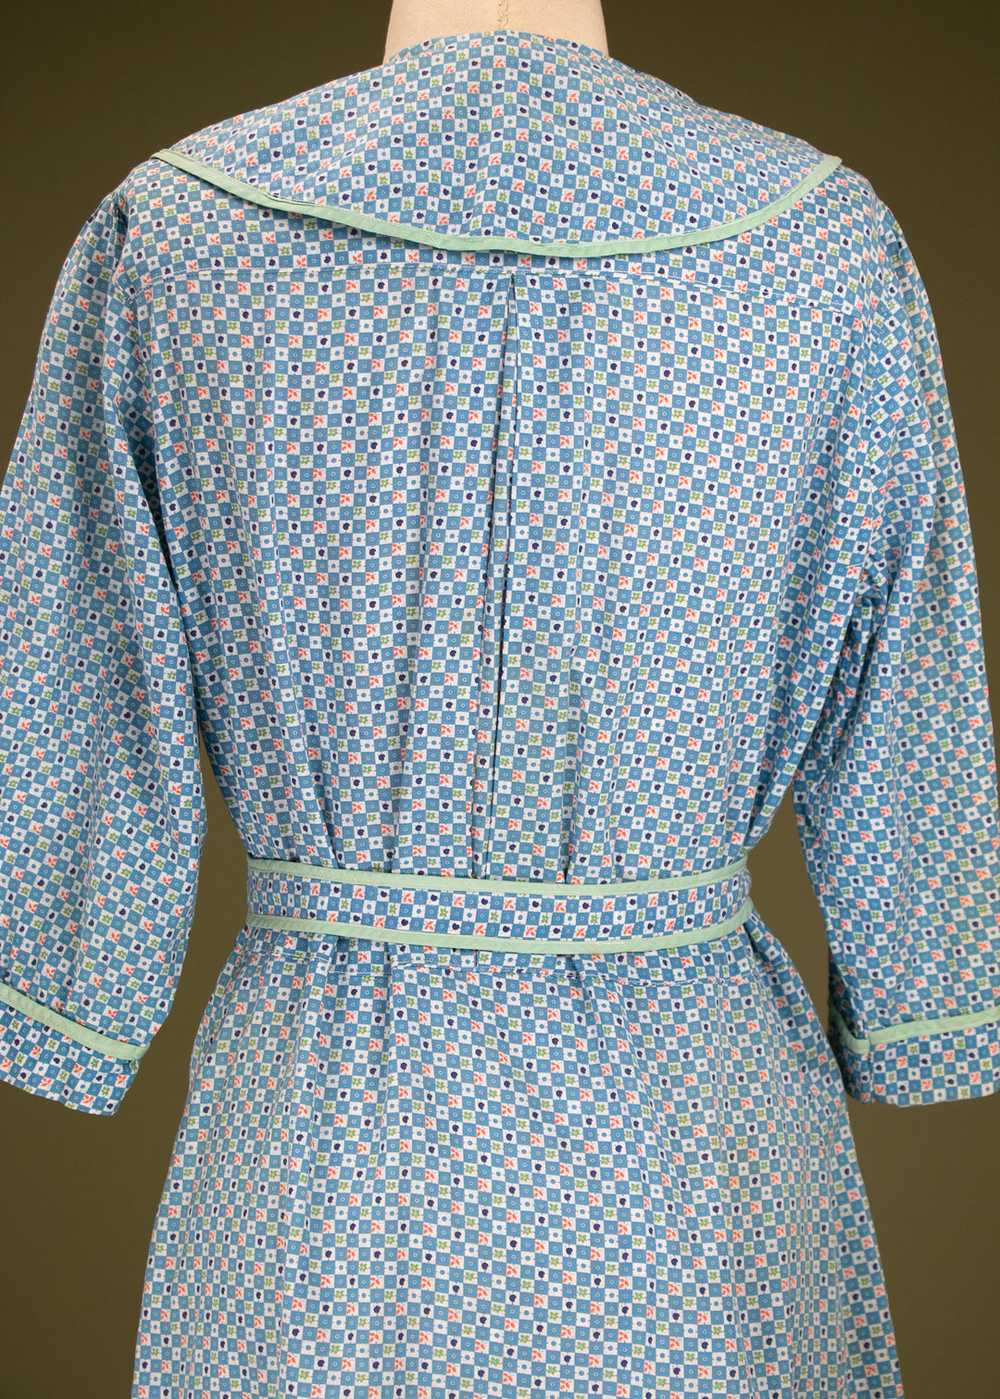 Vintage 1930's Depression Era Blue Farm Dress - image 10